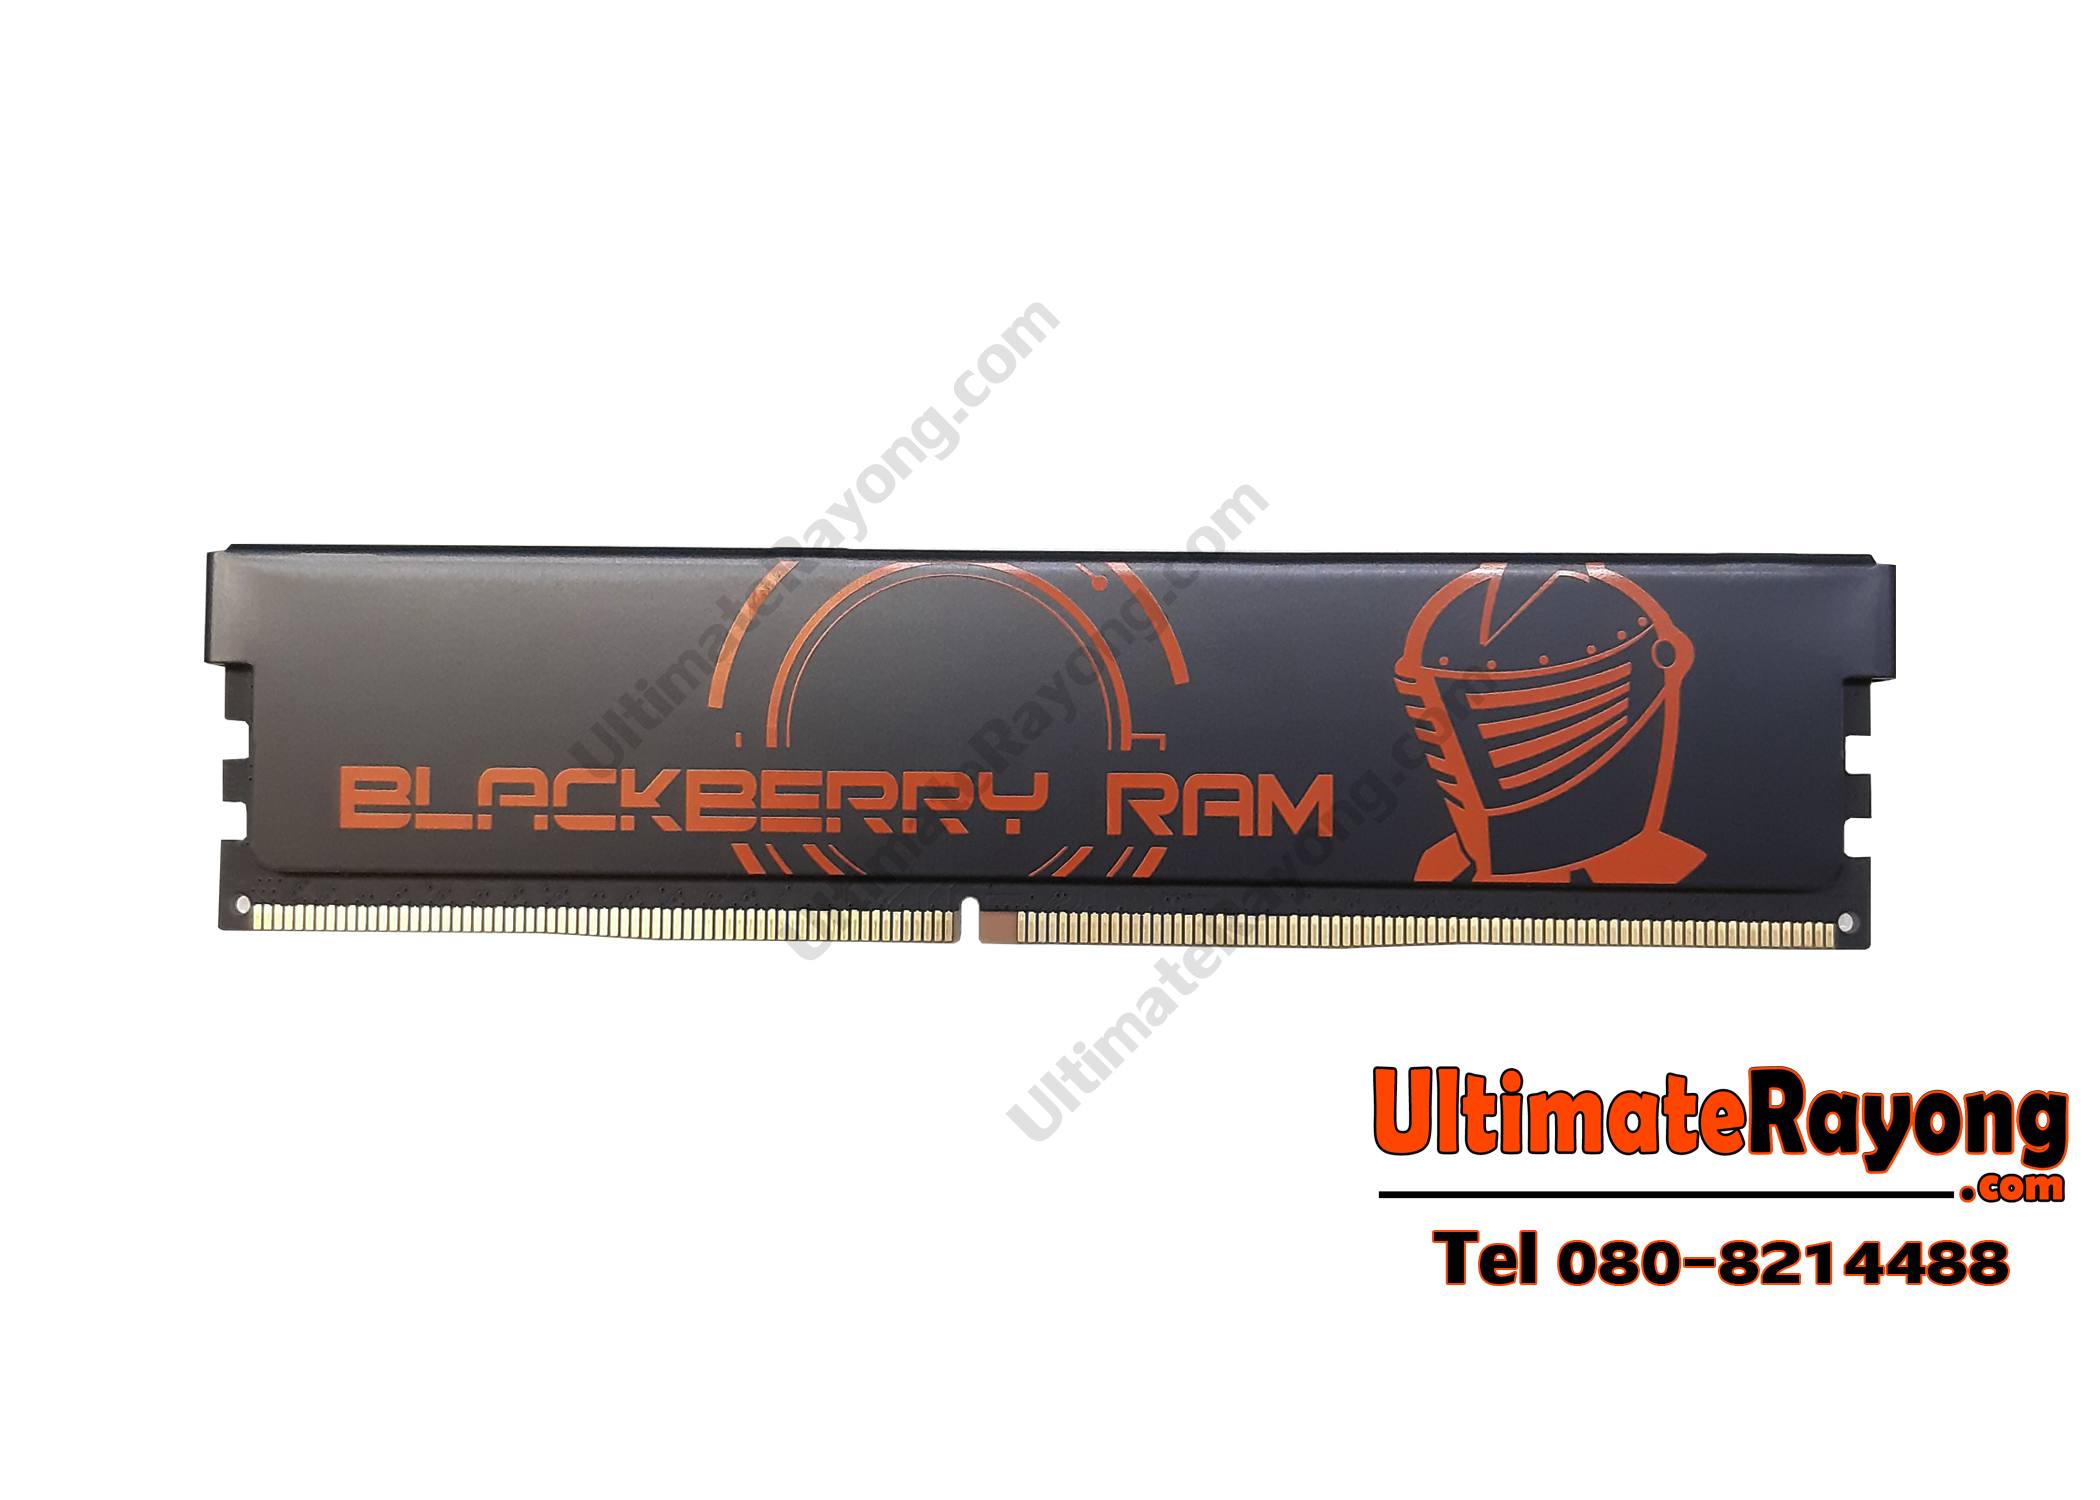 DDR4 8GB/2400MHz Black Berry MAXIMUS